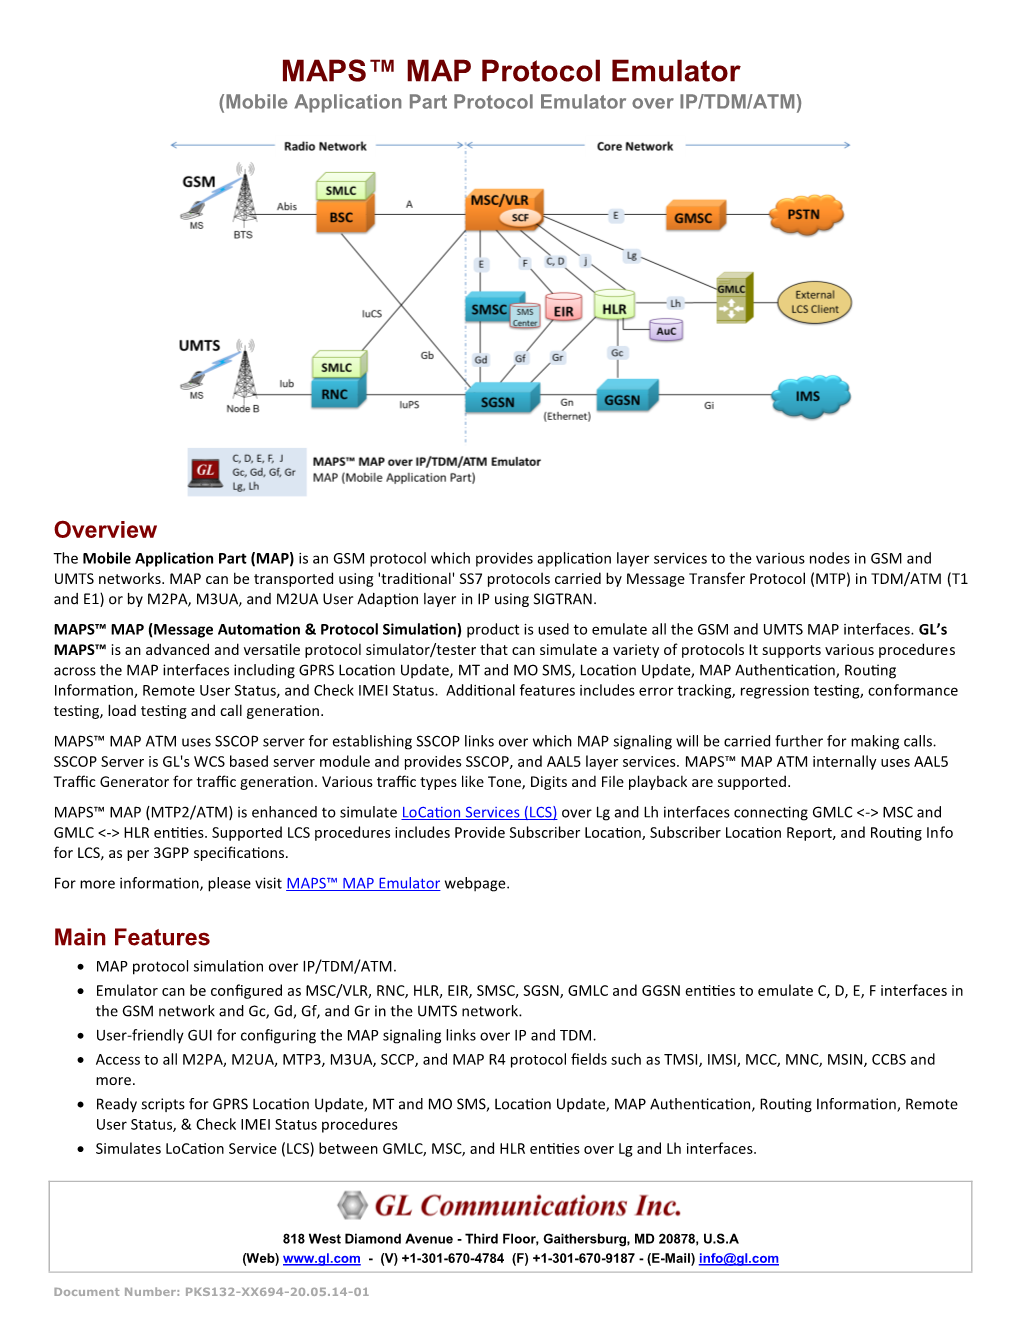 MAPS™ MAP Protocol Emulator (Mobile Application Part Protocol Emulator Over IP/TDM/ATM)